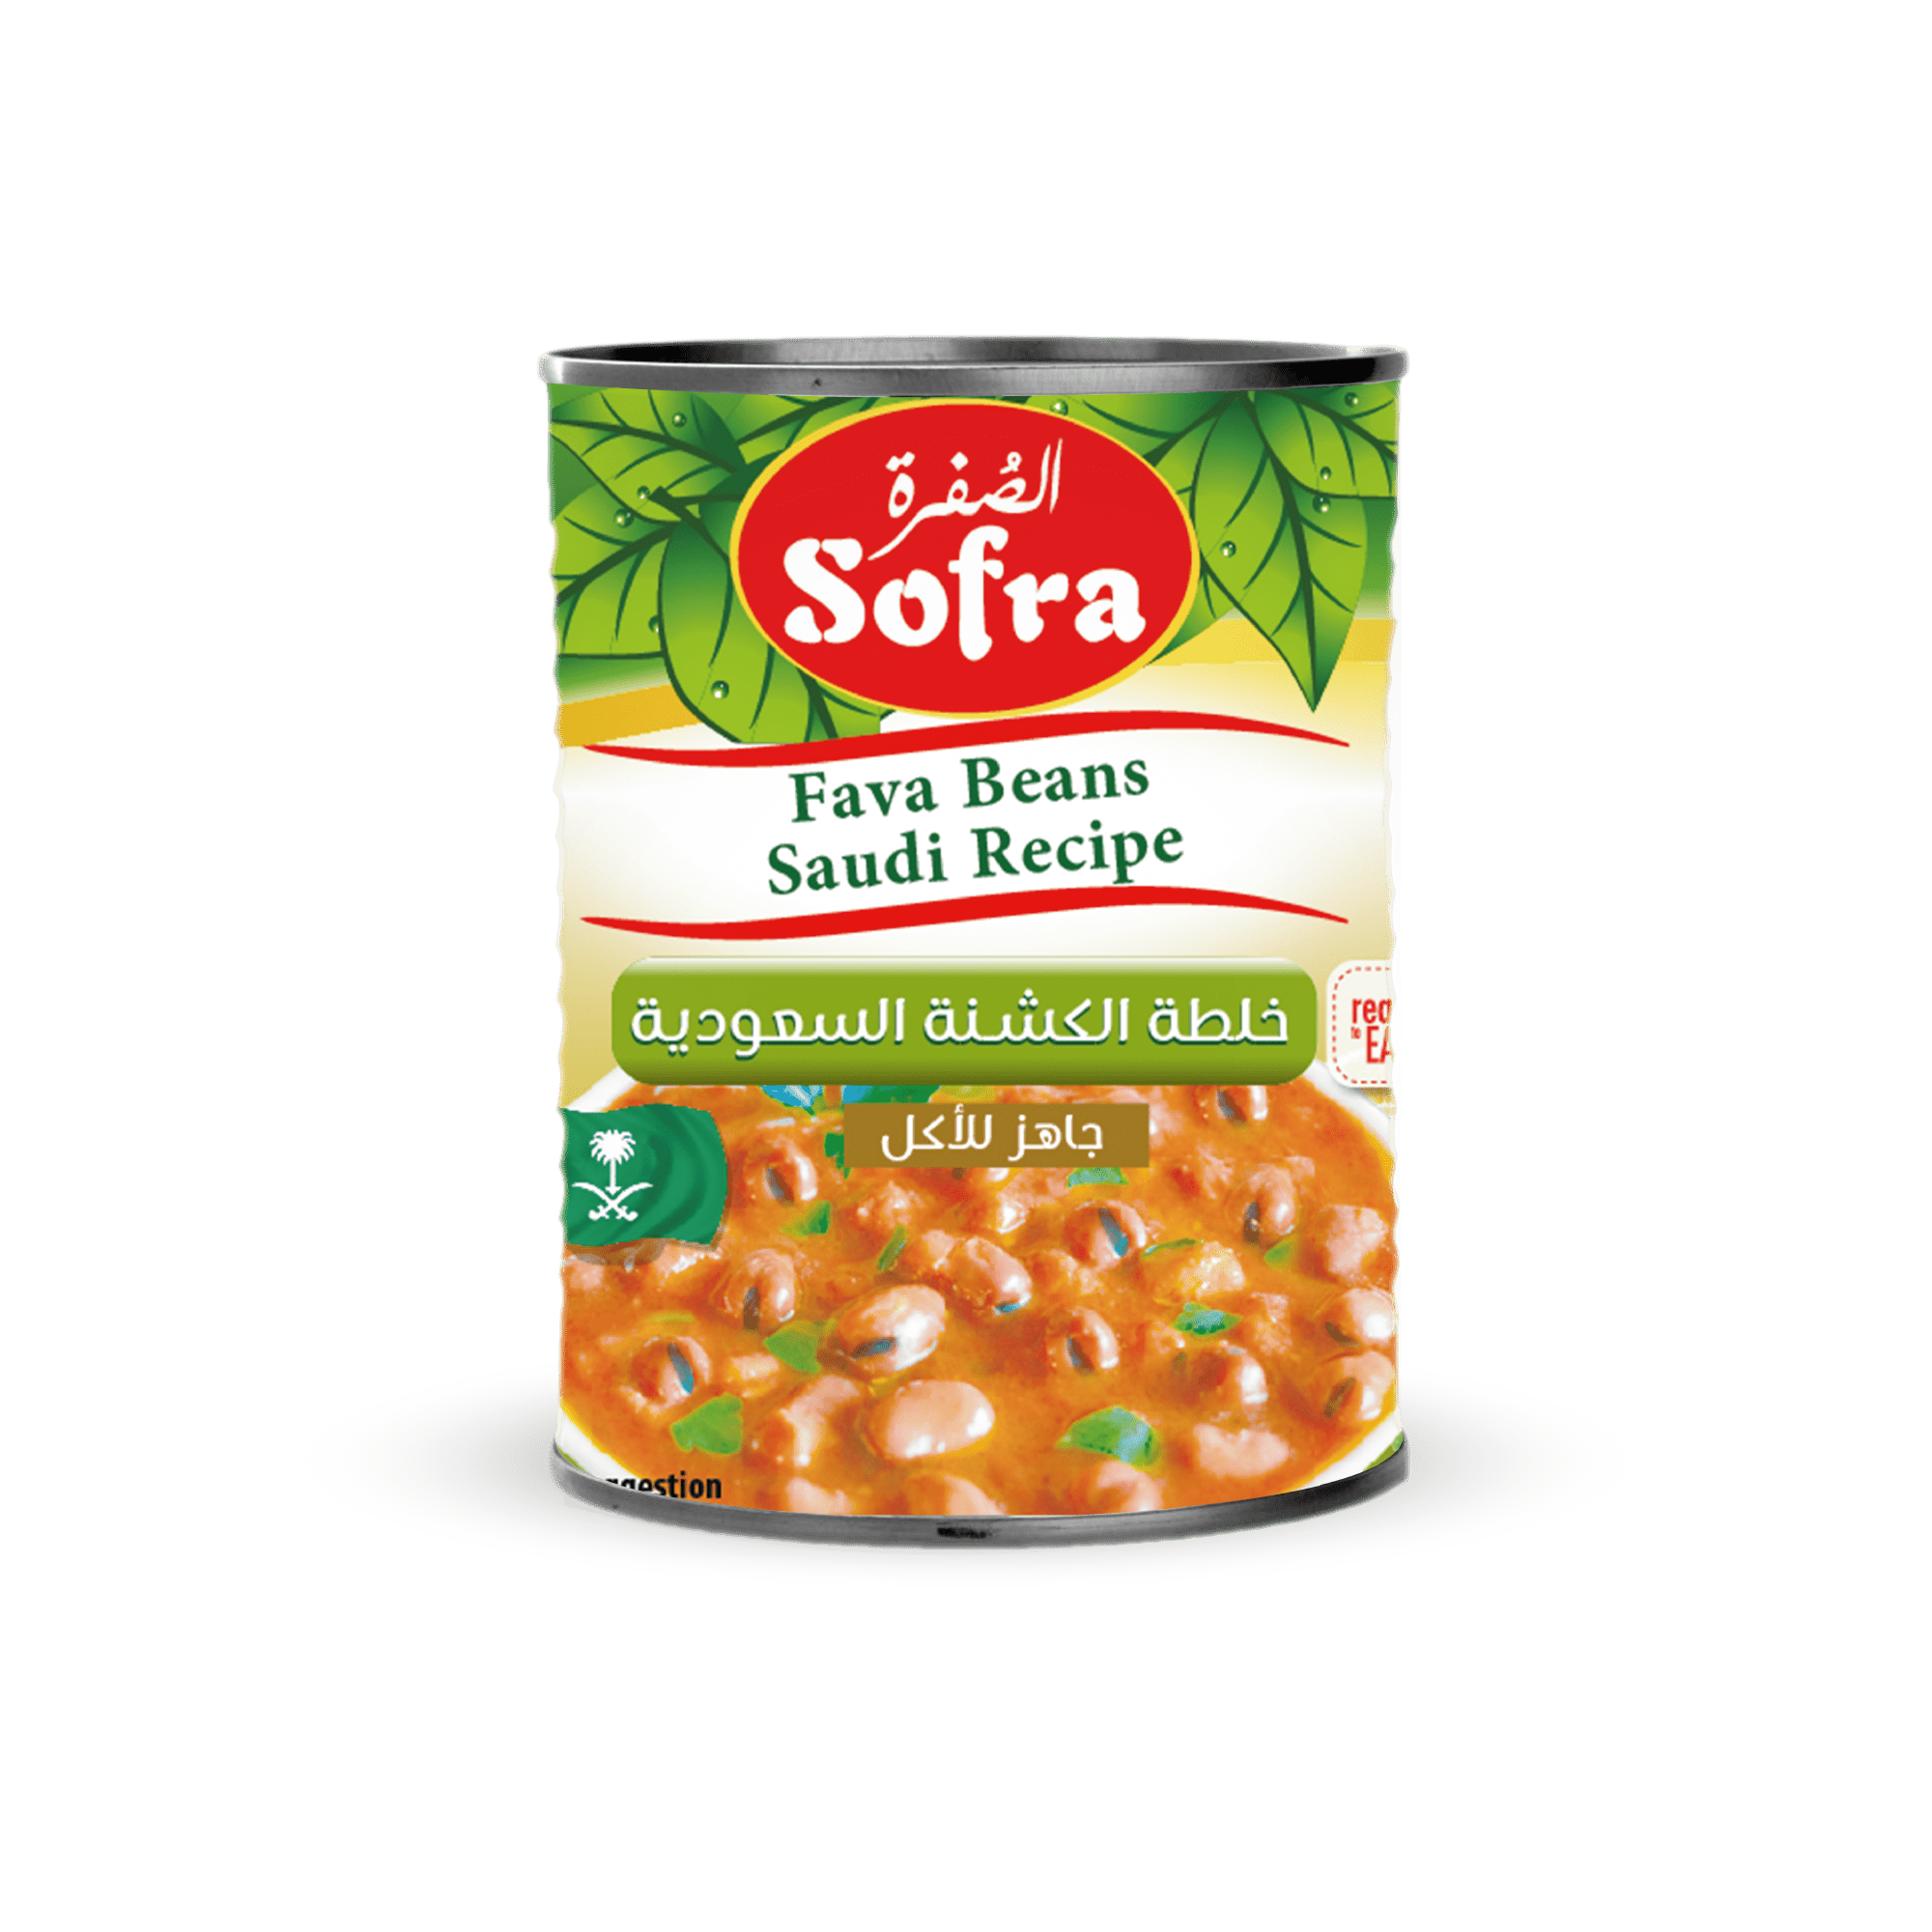 Sofra fava beans Saudi recipe